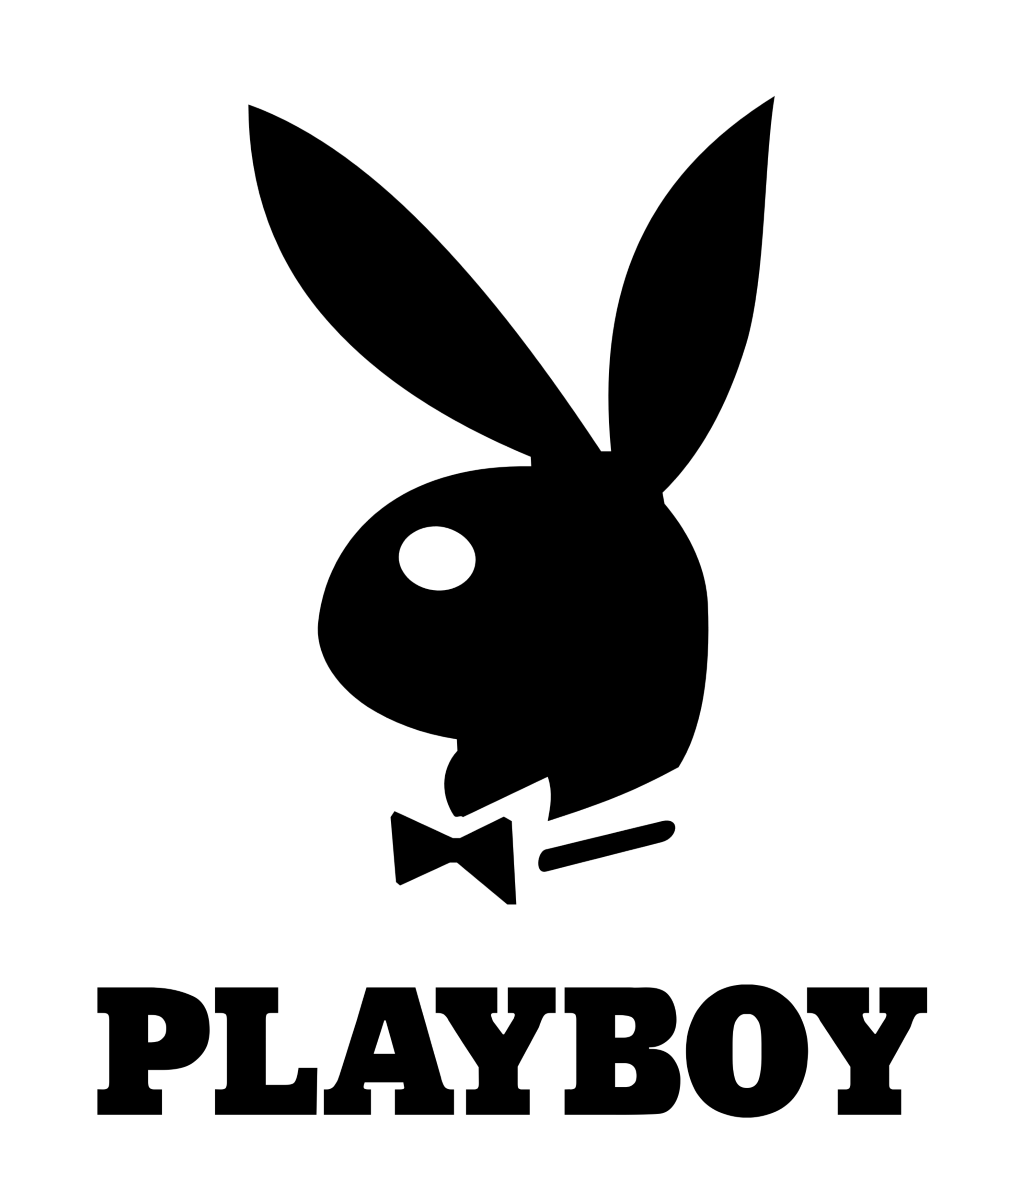 Playboy rabbit, text, logo, black, white